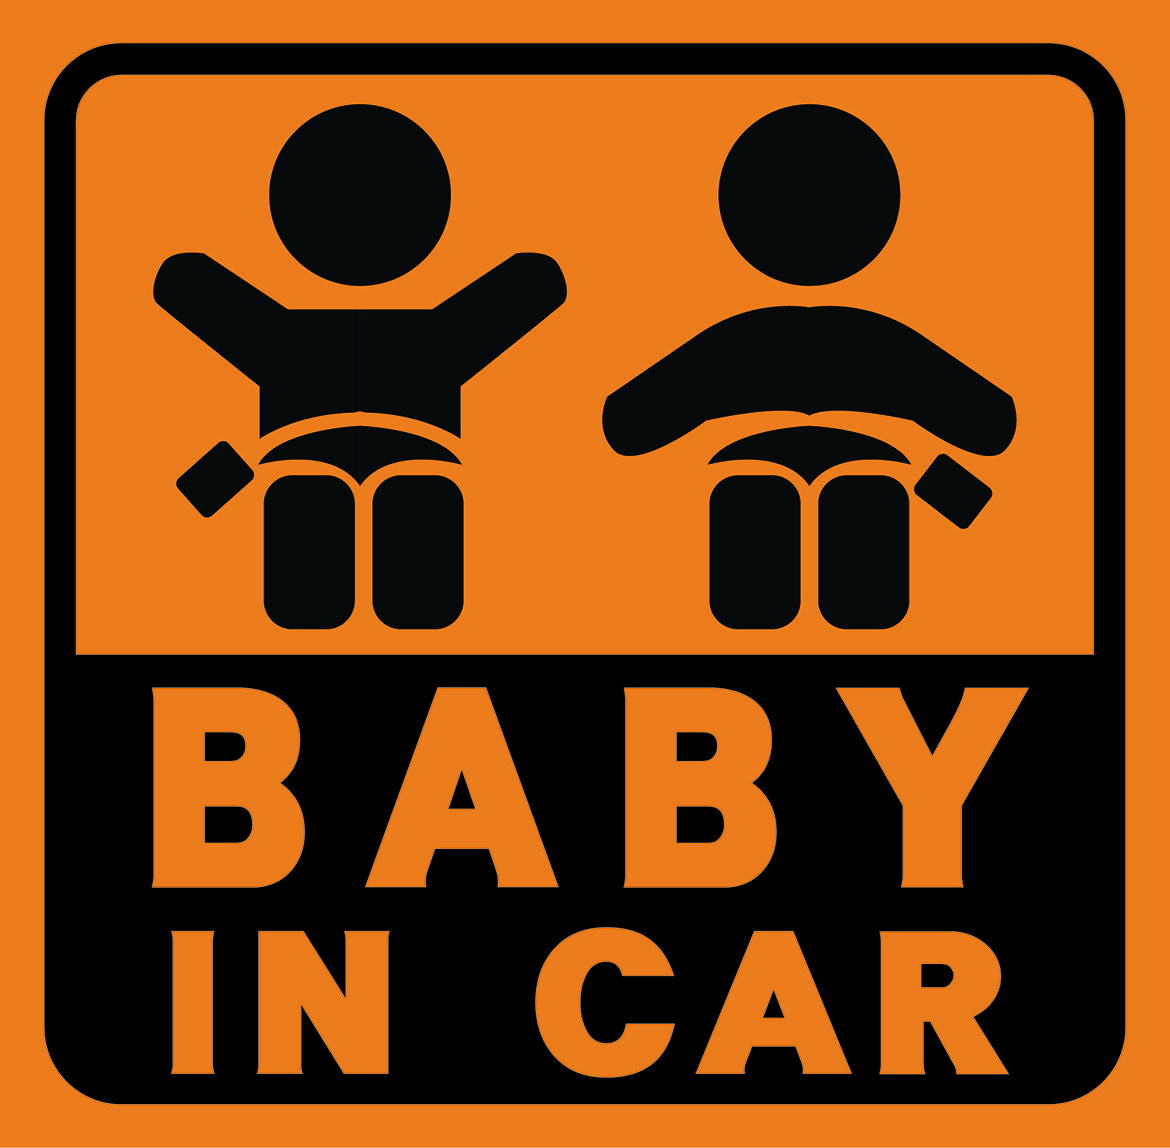 Baby in car 拷貝 https://gonews.com.tw/wp-content/uploads/2021/06/carl-figuracion-4X_4QhWxyzM-unsplash-拷貝-optimized.jpg